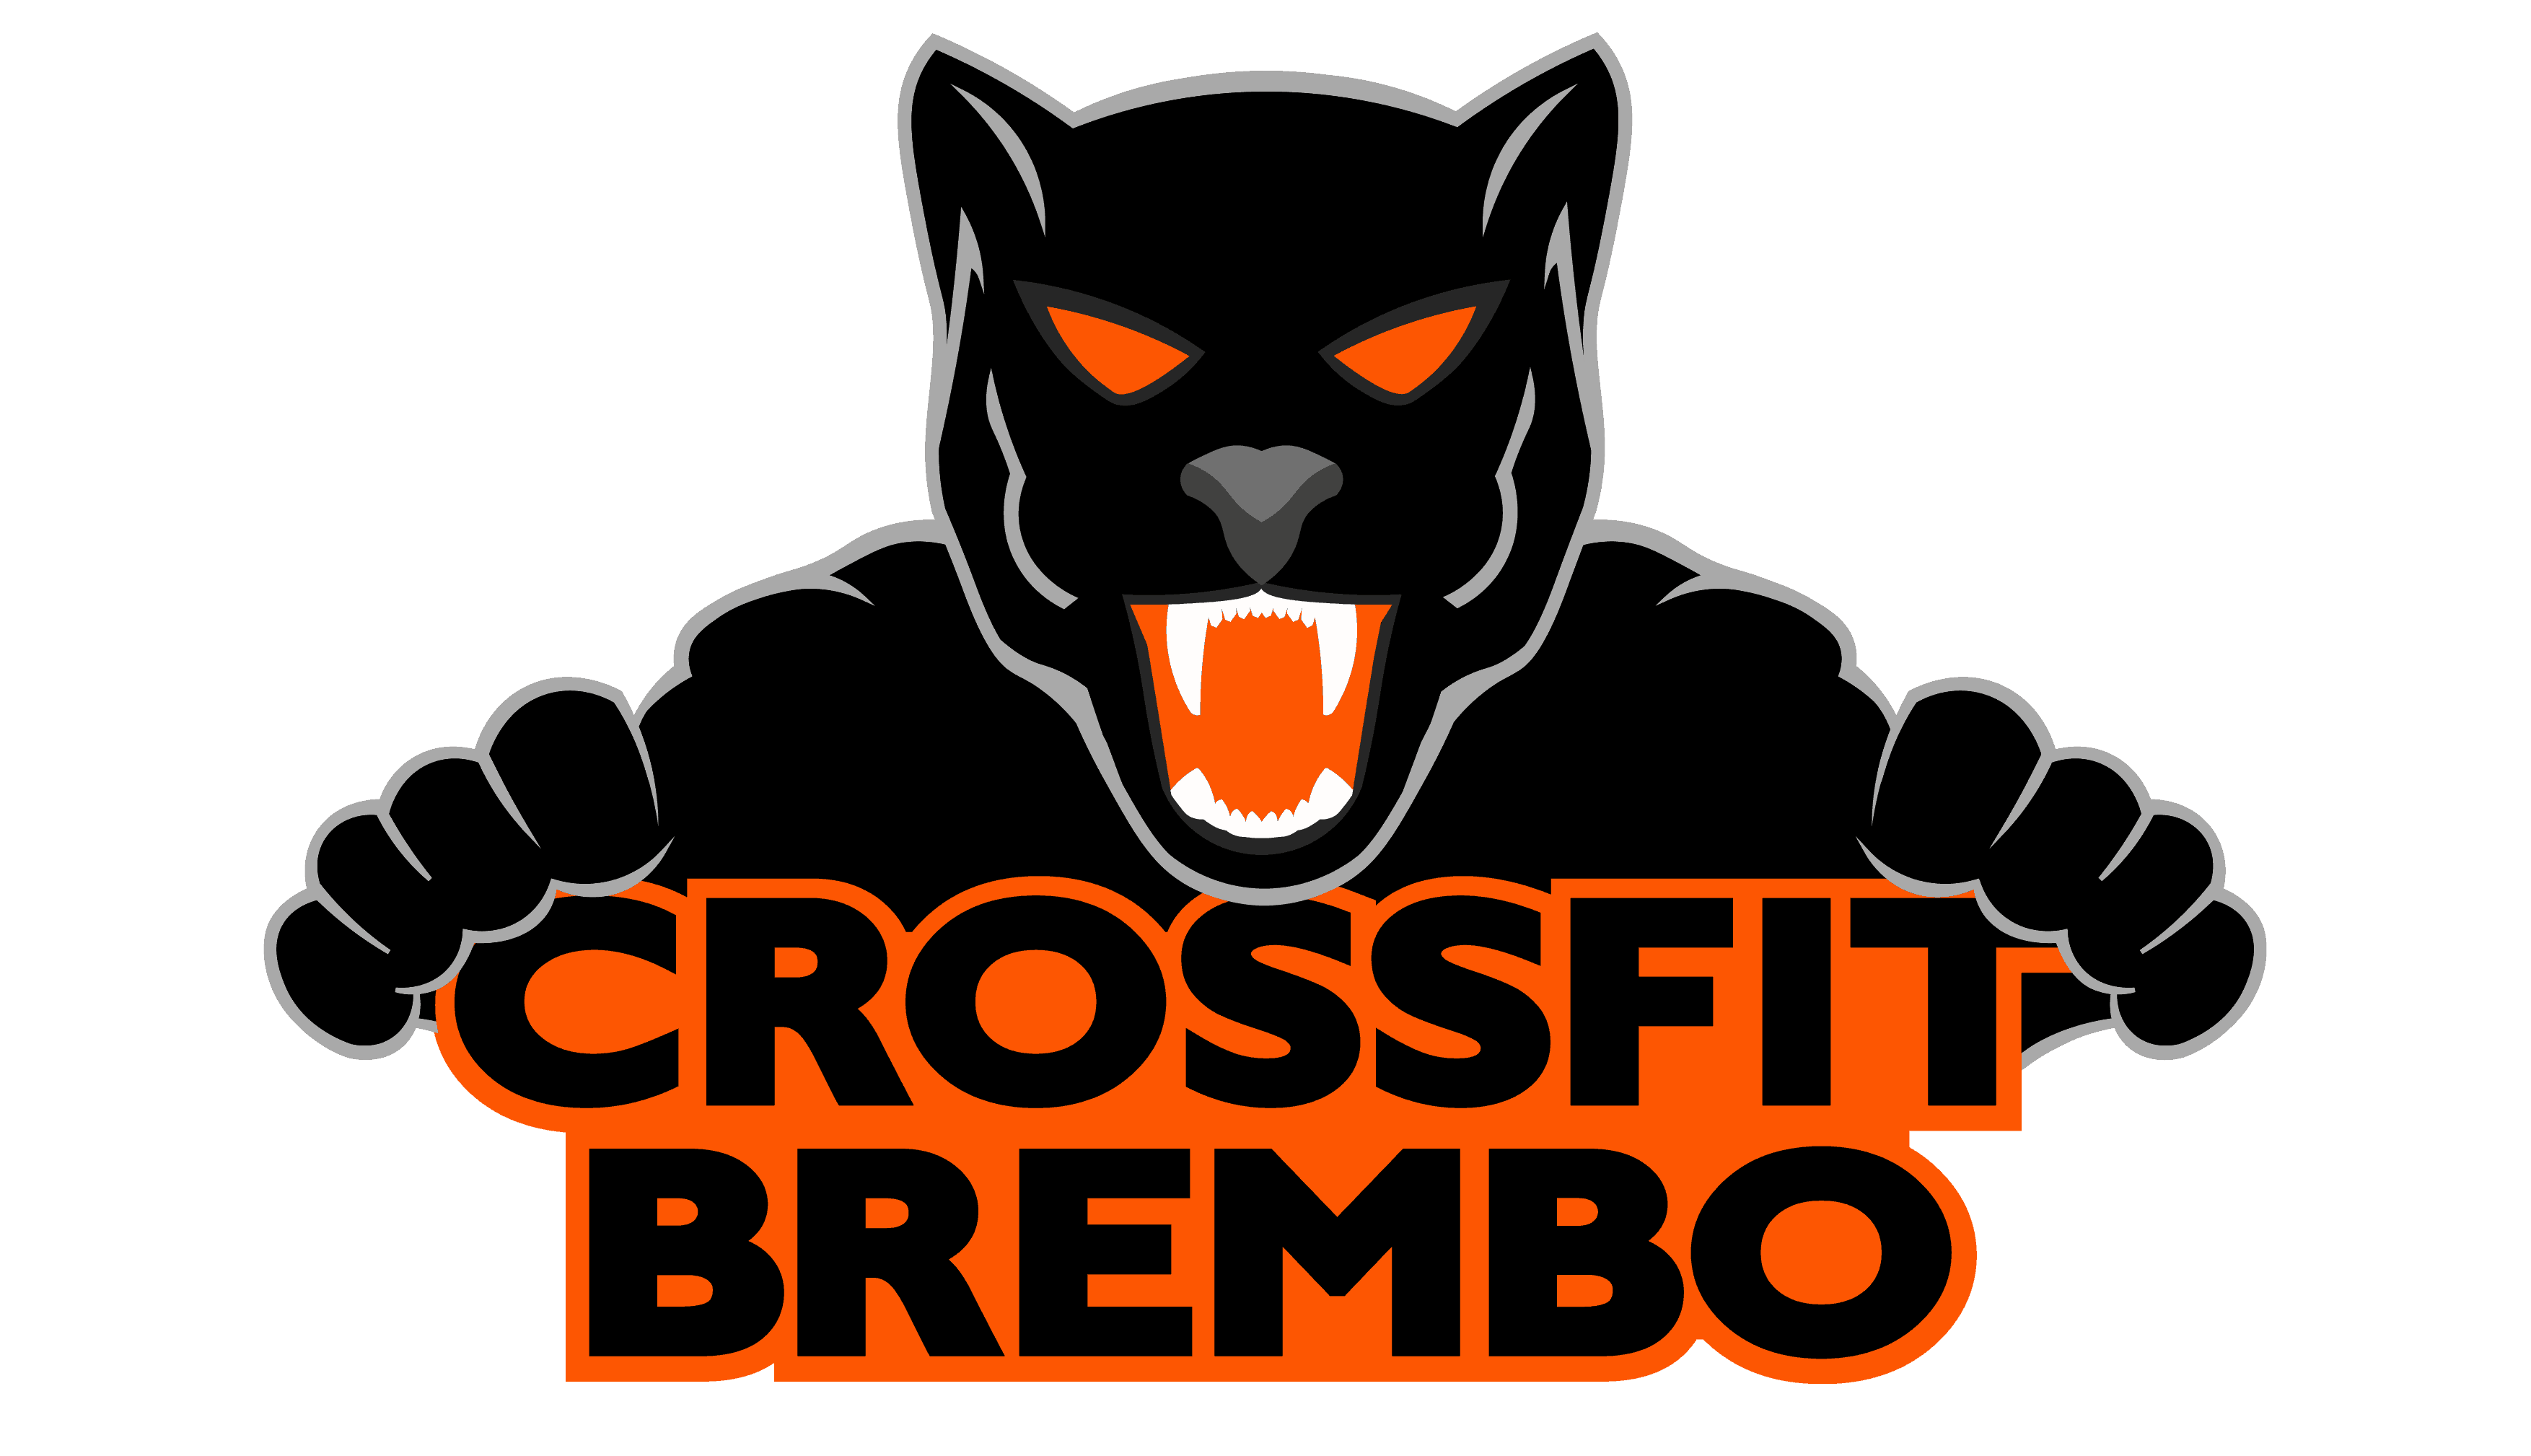 Crossfit Brembo